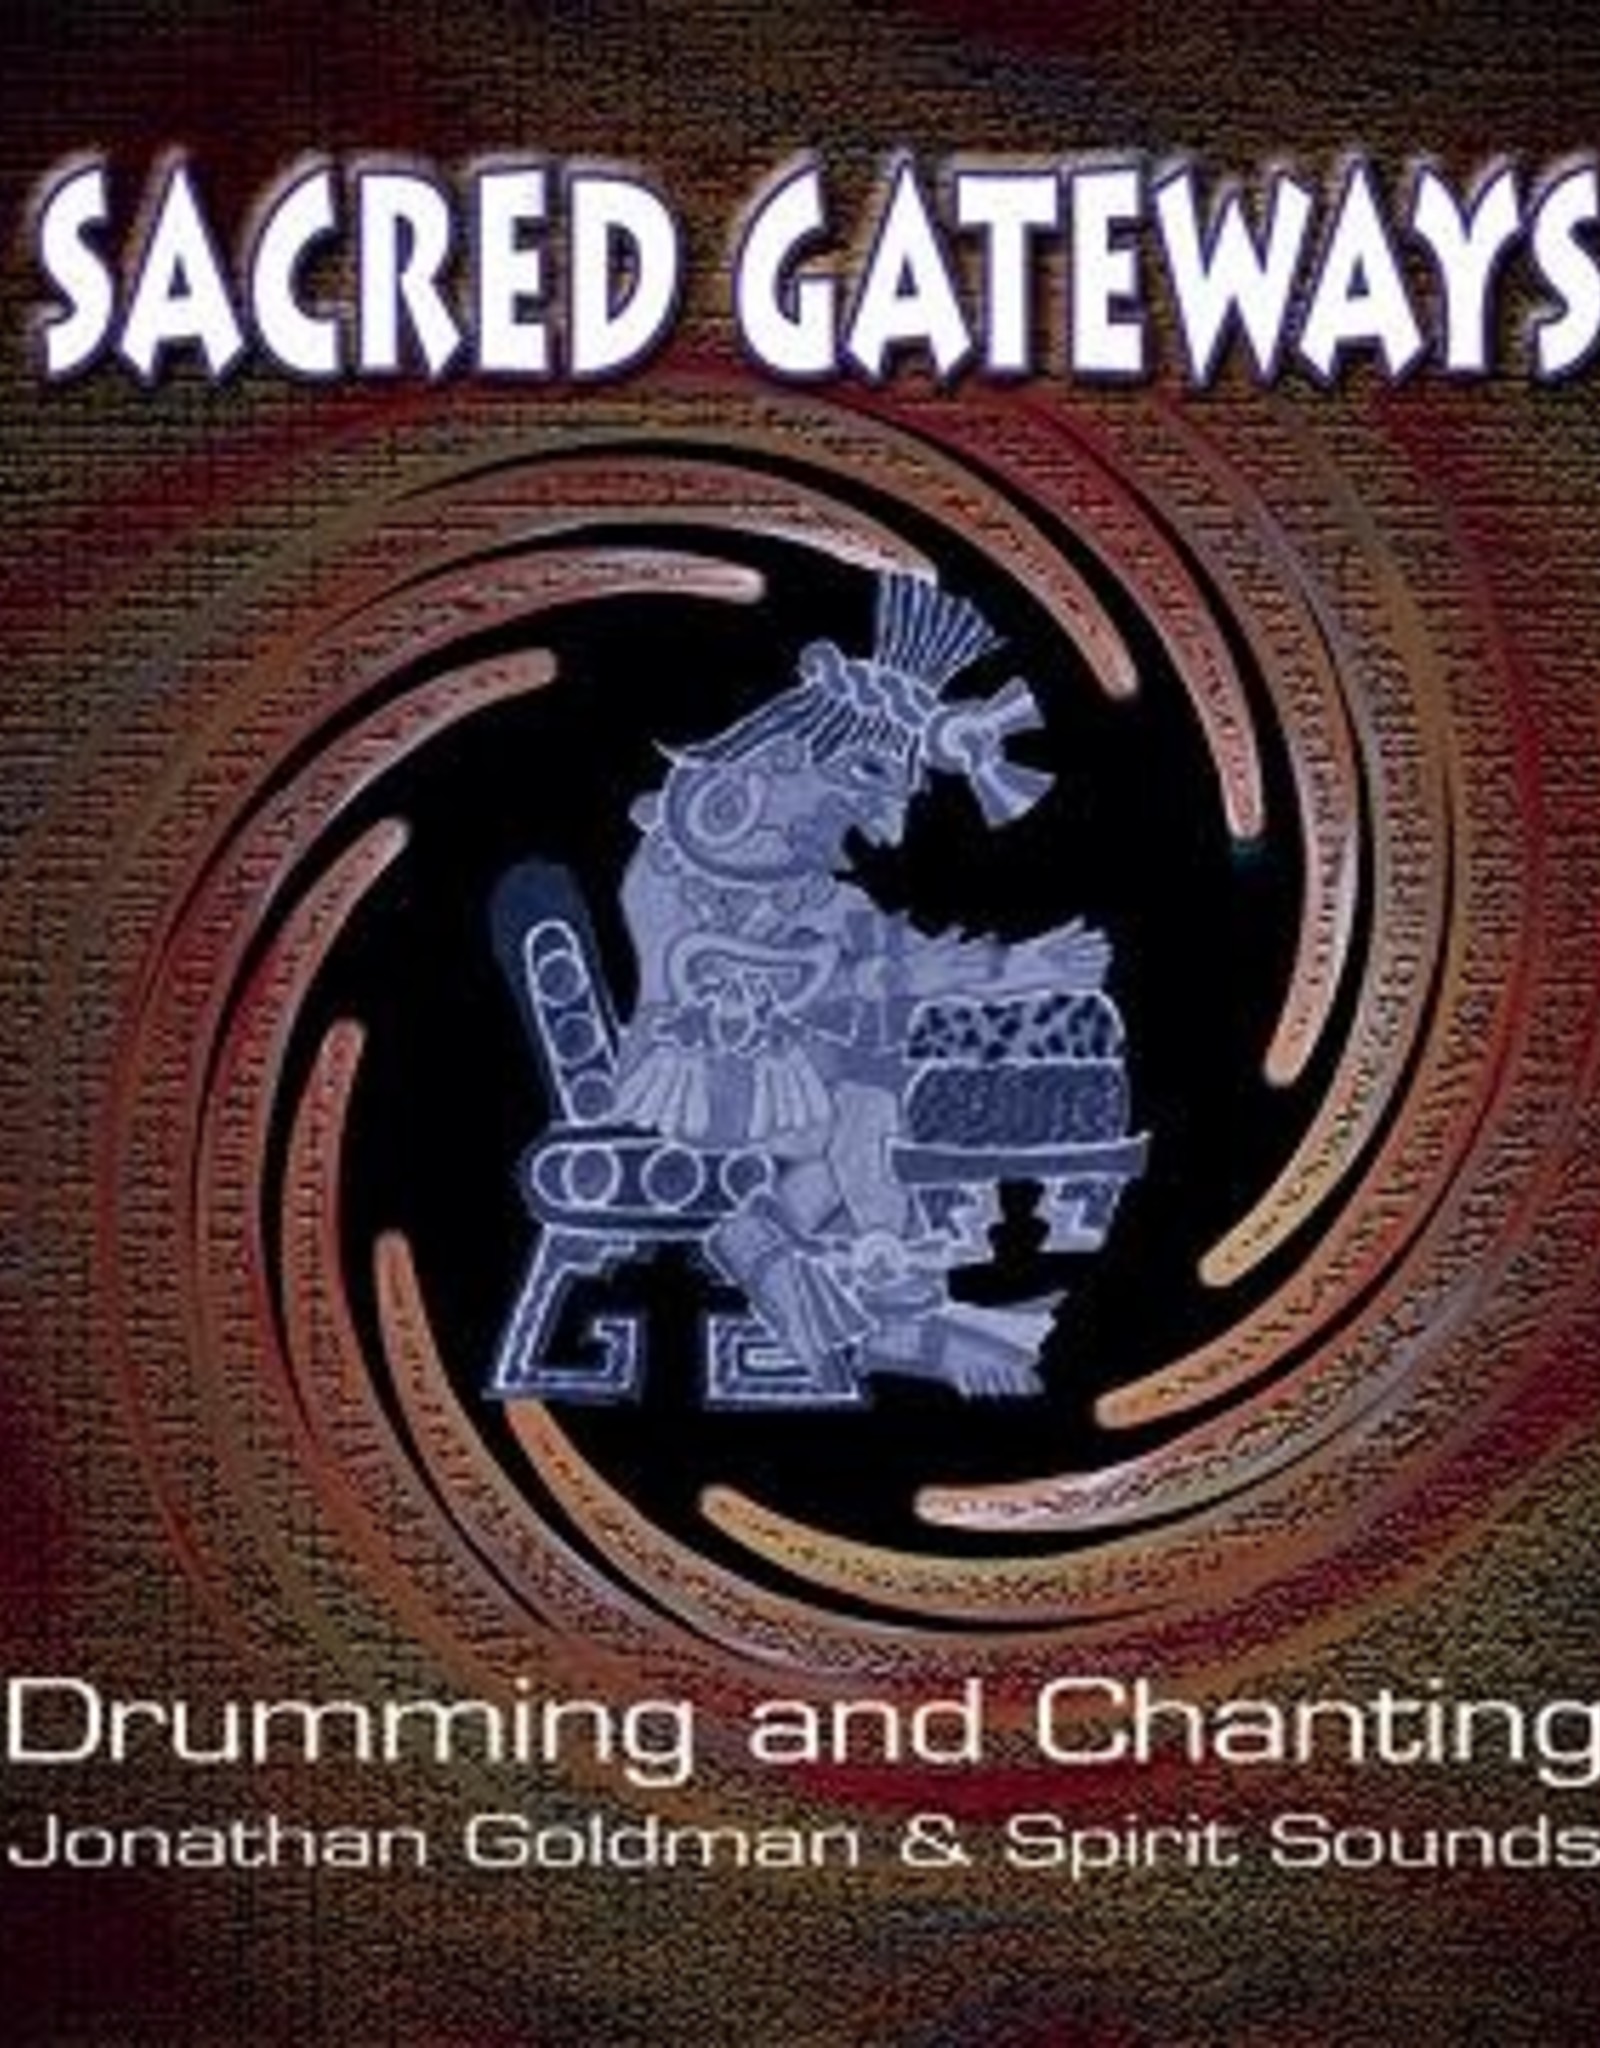 Sacred Gateways CD